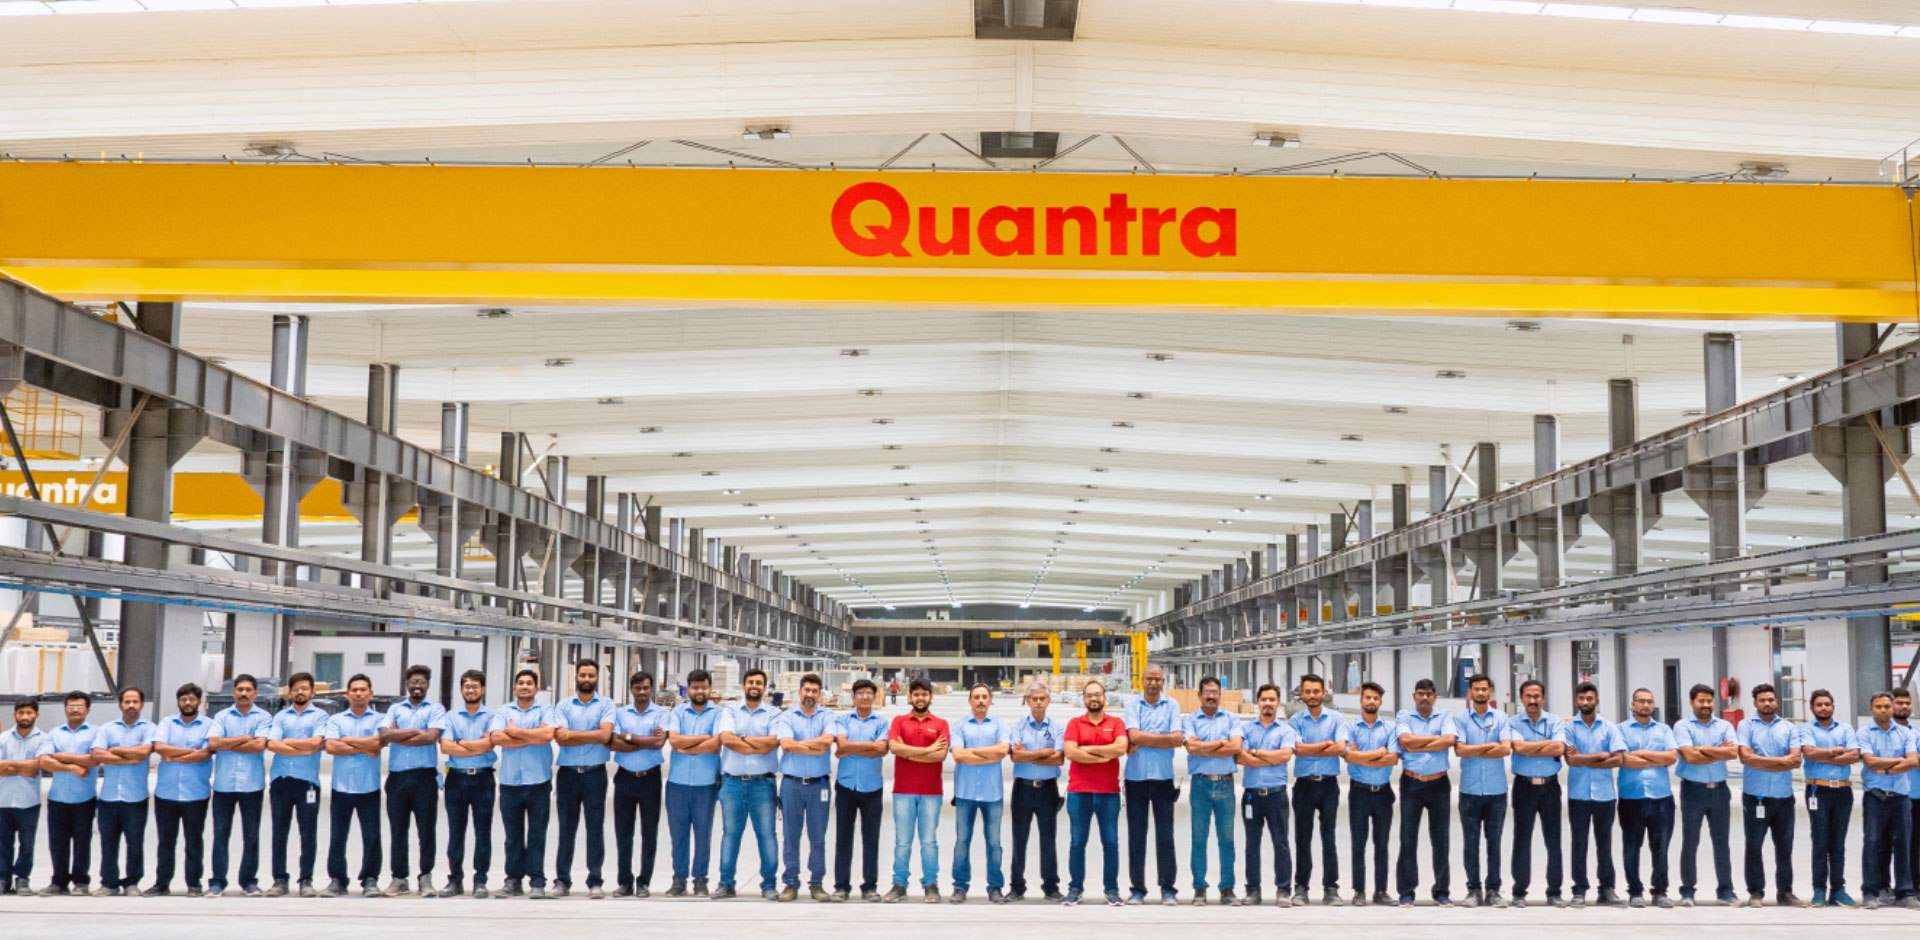 careers at Quantra_ Join team Quantra